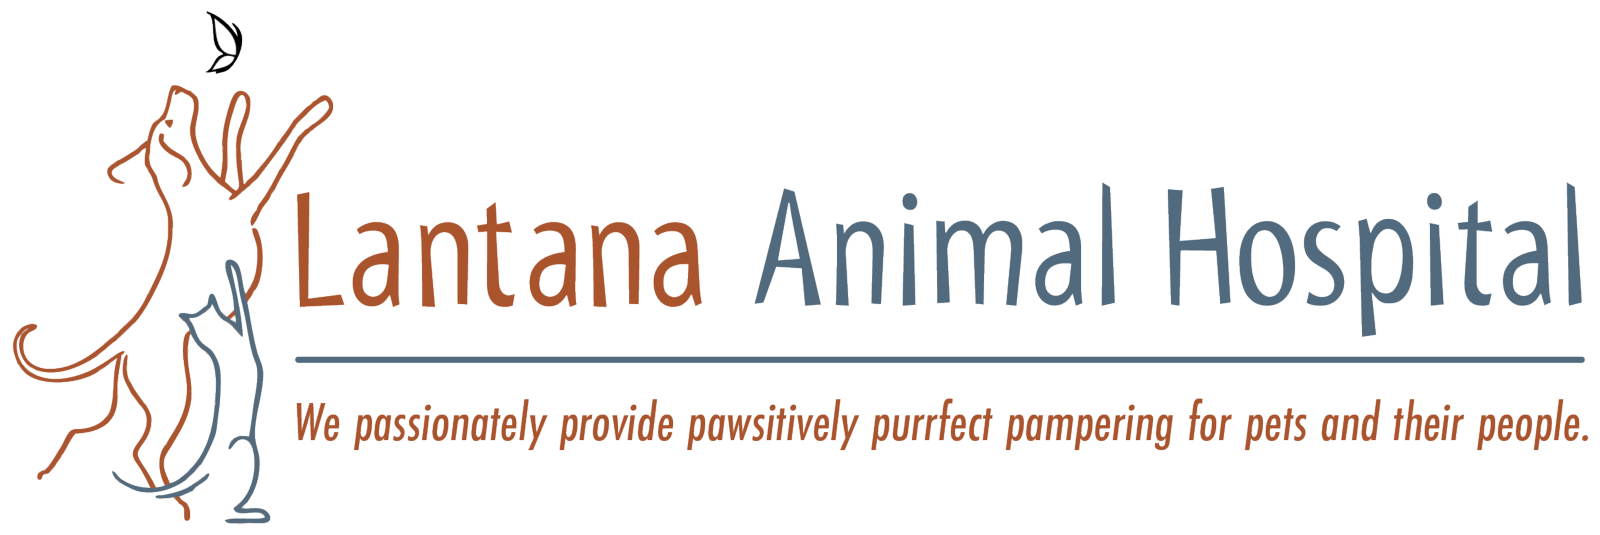 Lantana Animal Hospital